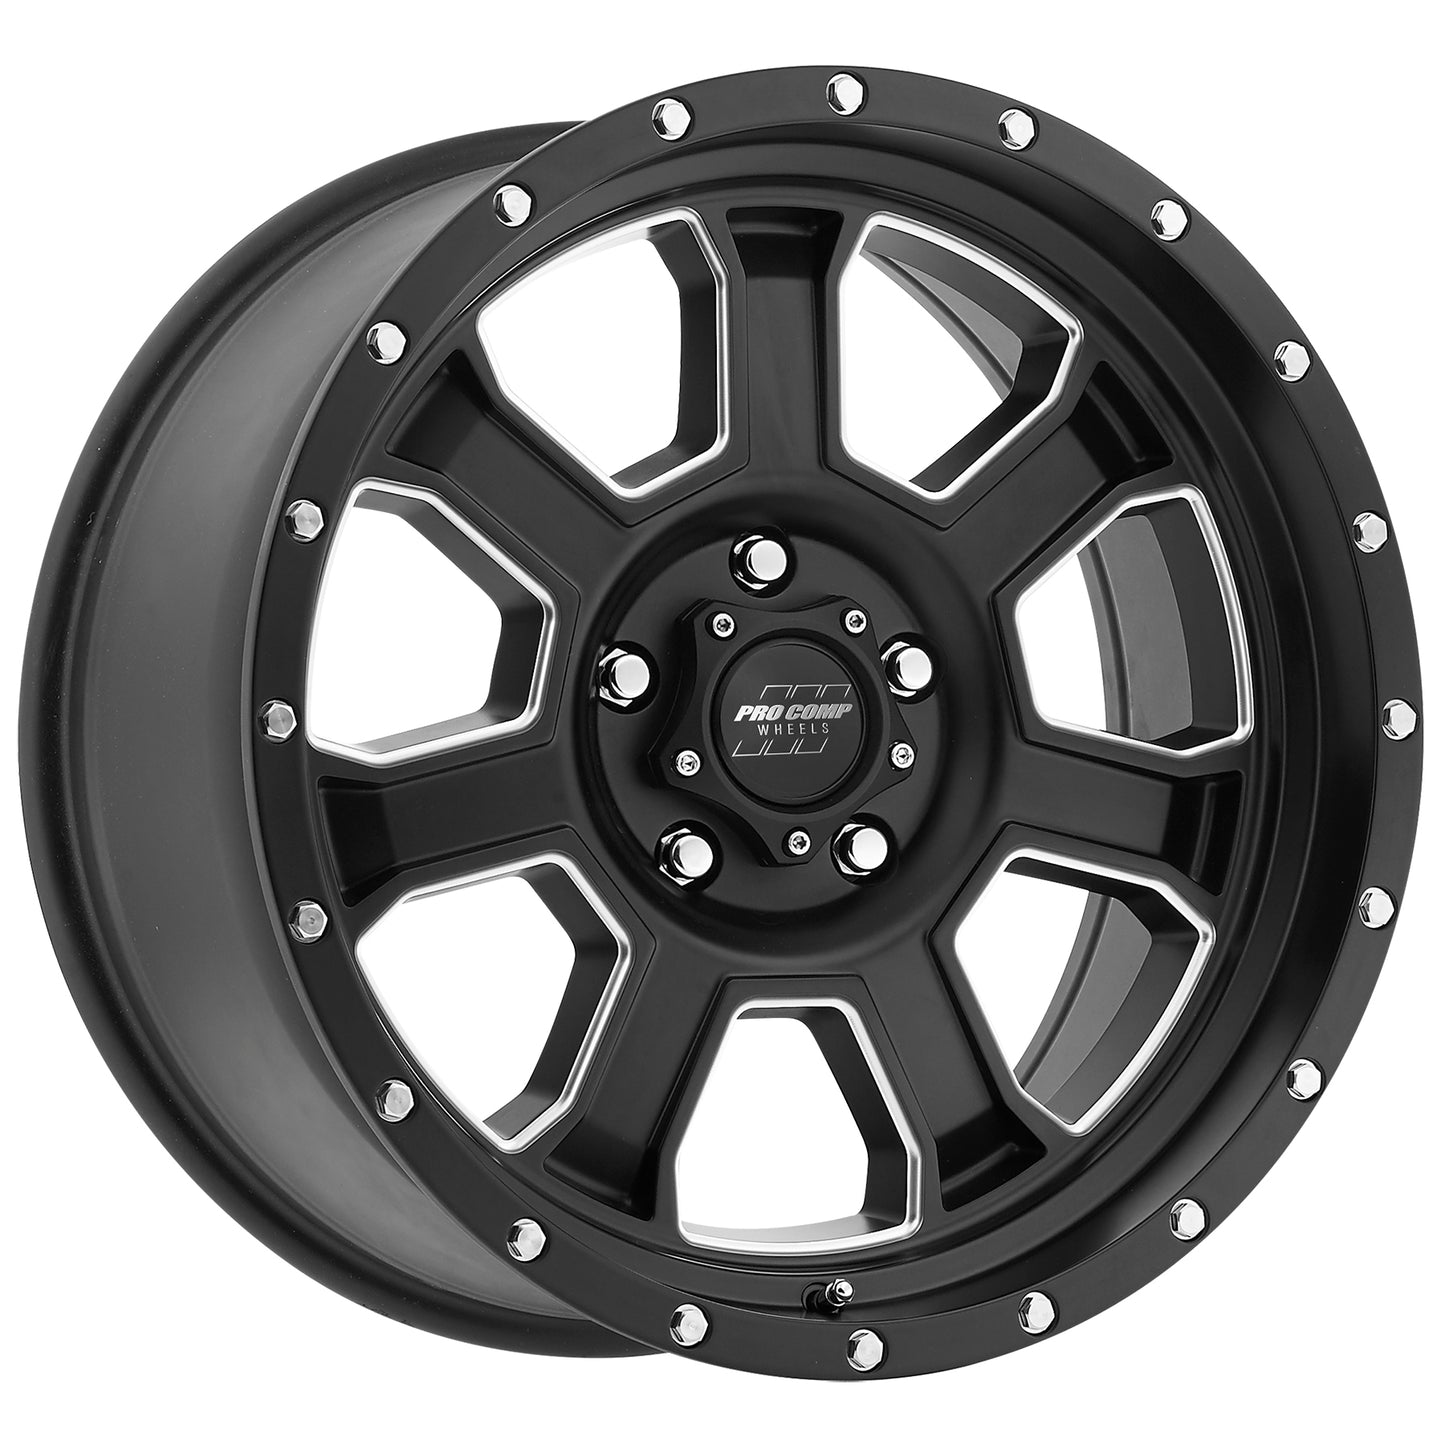 Pro Comp Wheels Sledge Satin Black Milled 20X9 5x5.5 5BS Offset 0mm Cap P/N 503445000 5143-2985